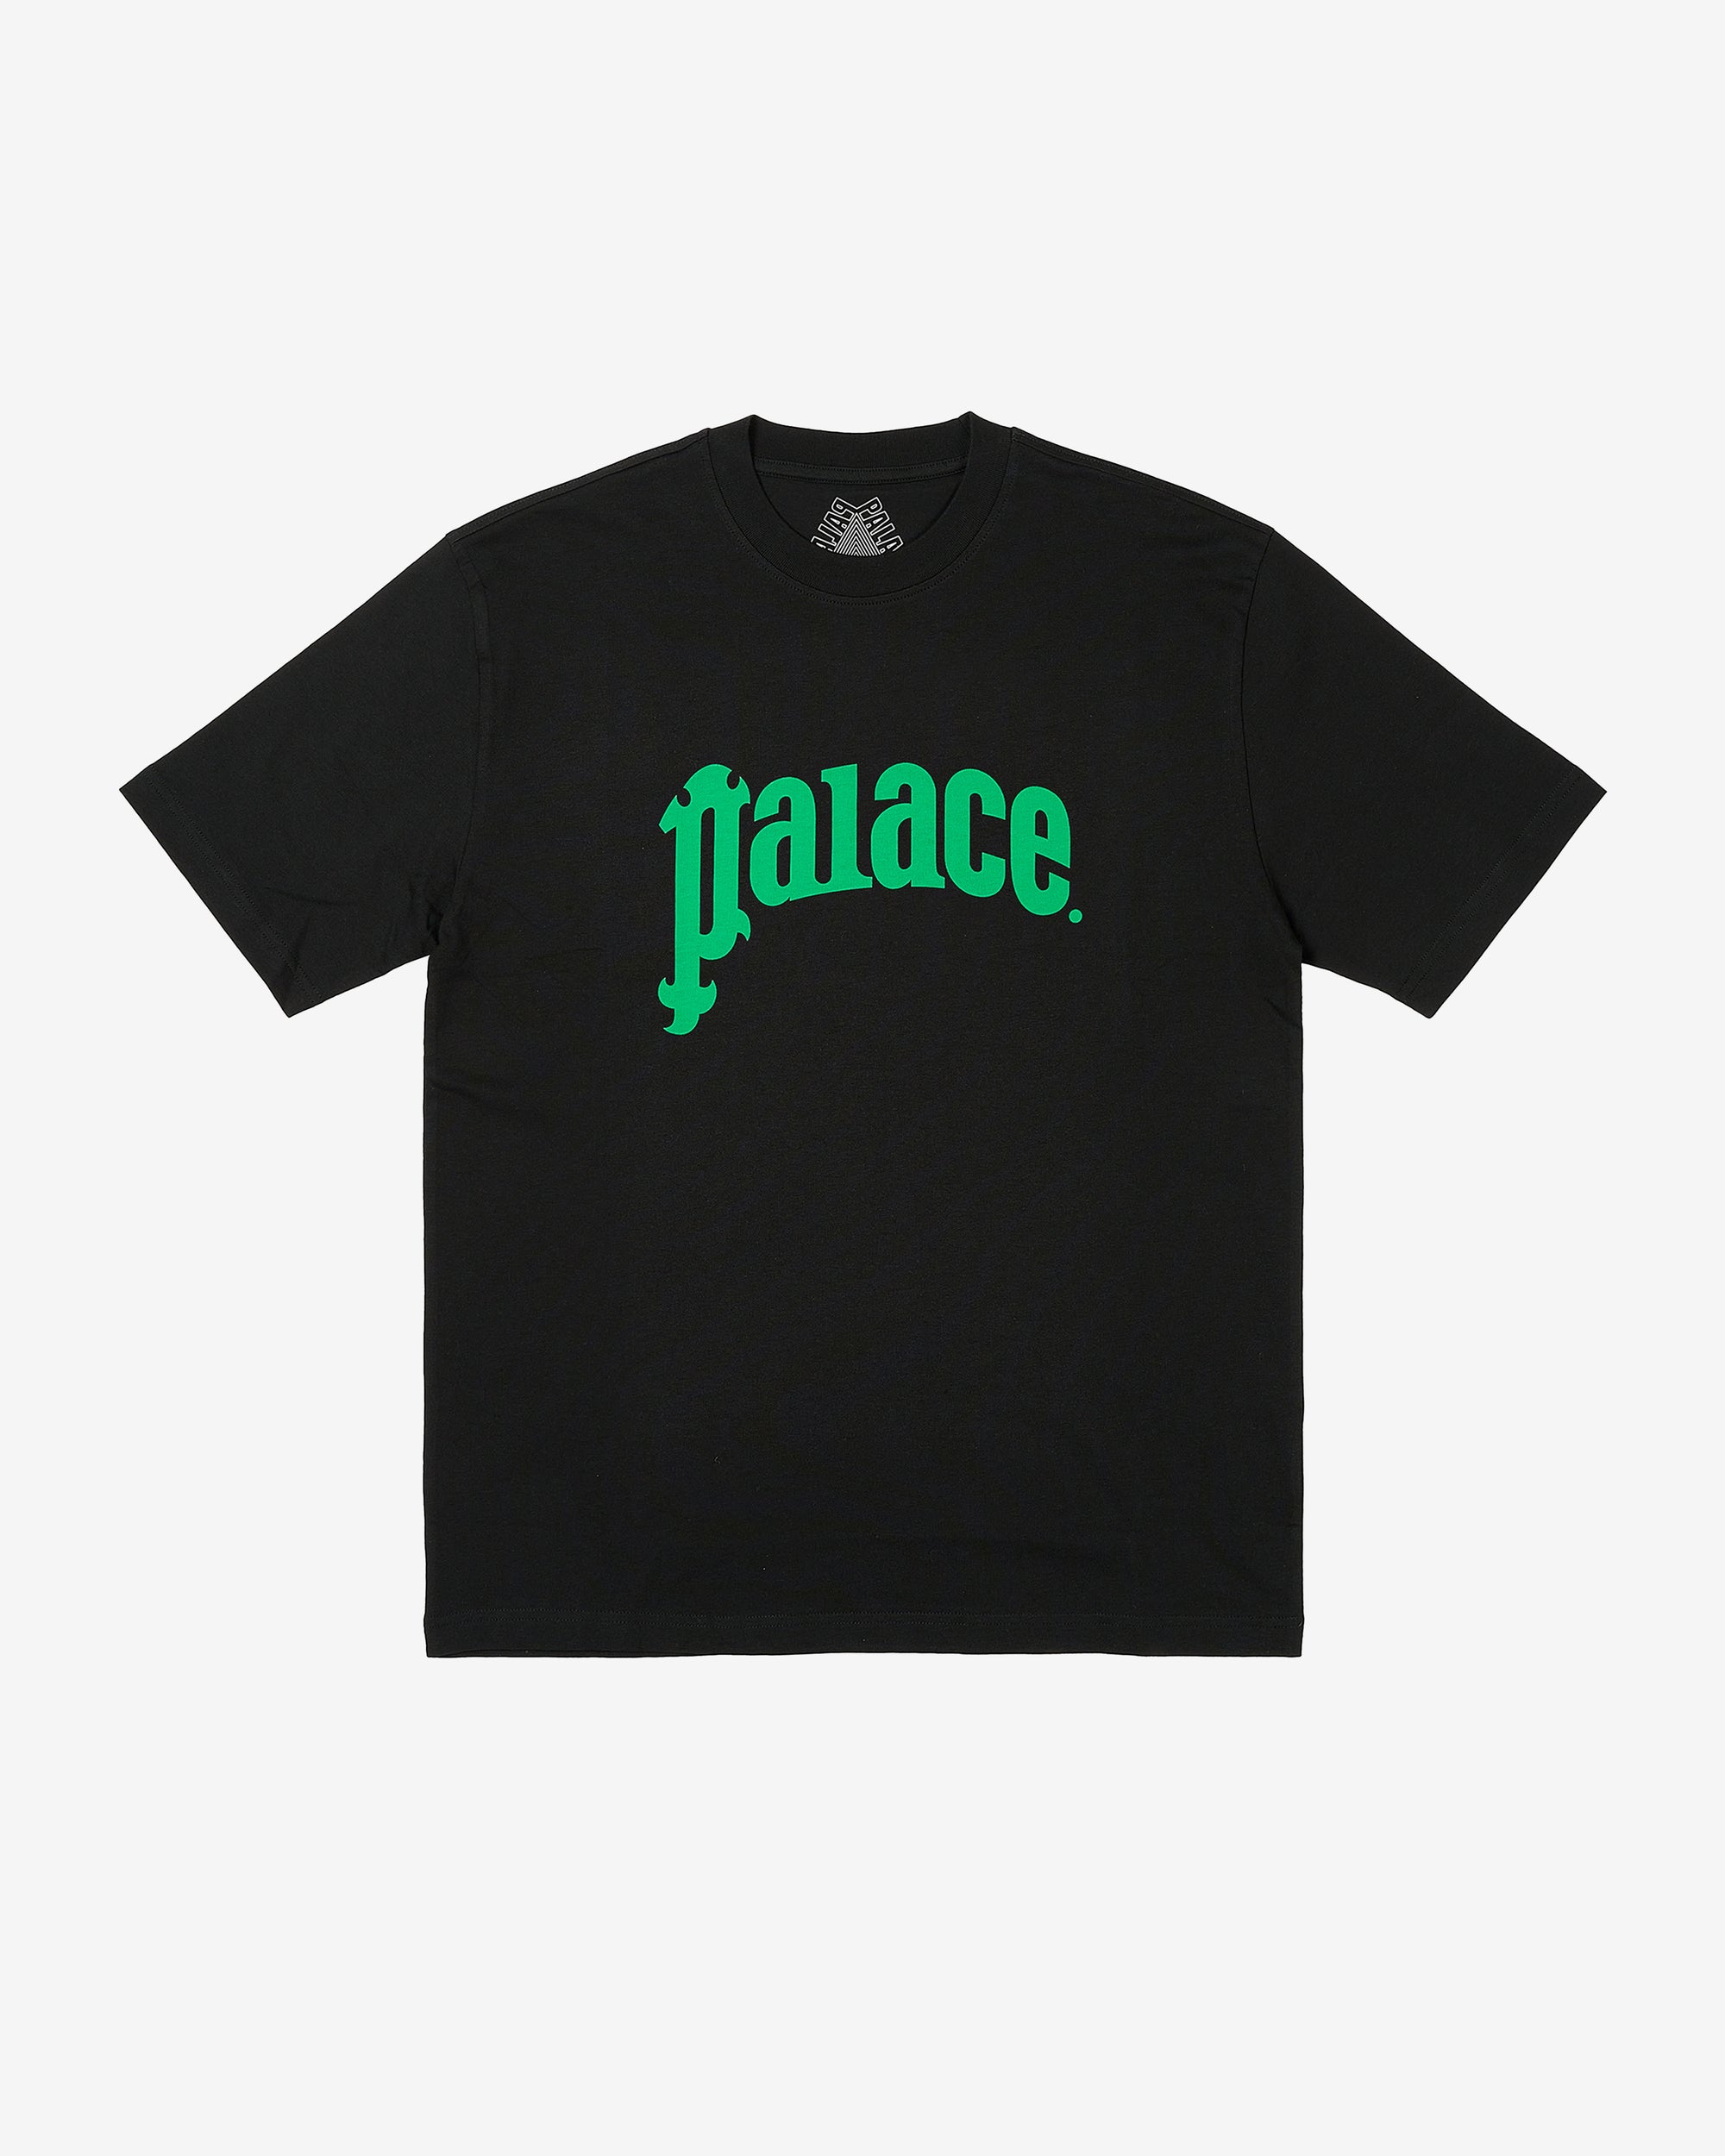 Palace - Men's Gassy T-Shirt - (Black) view 1